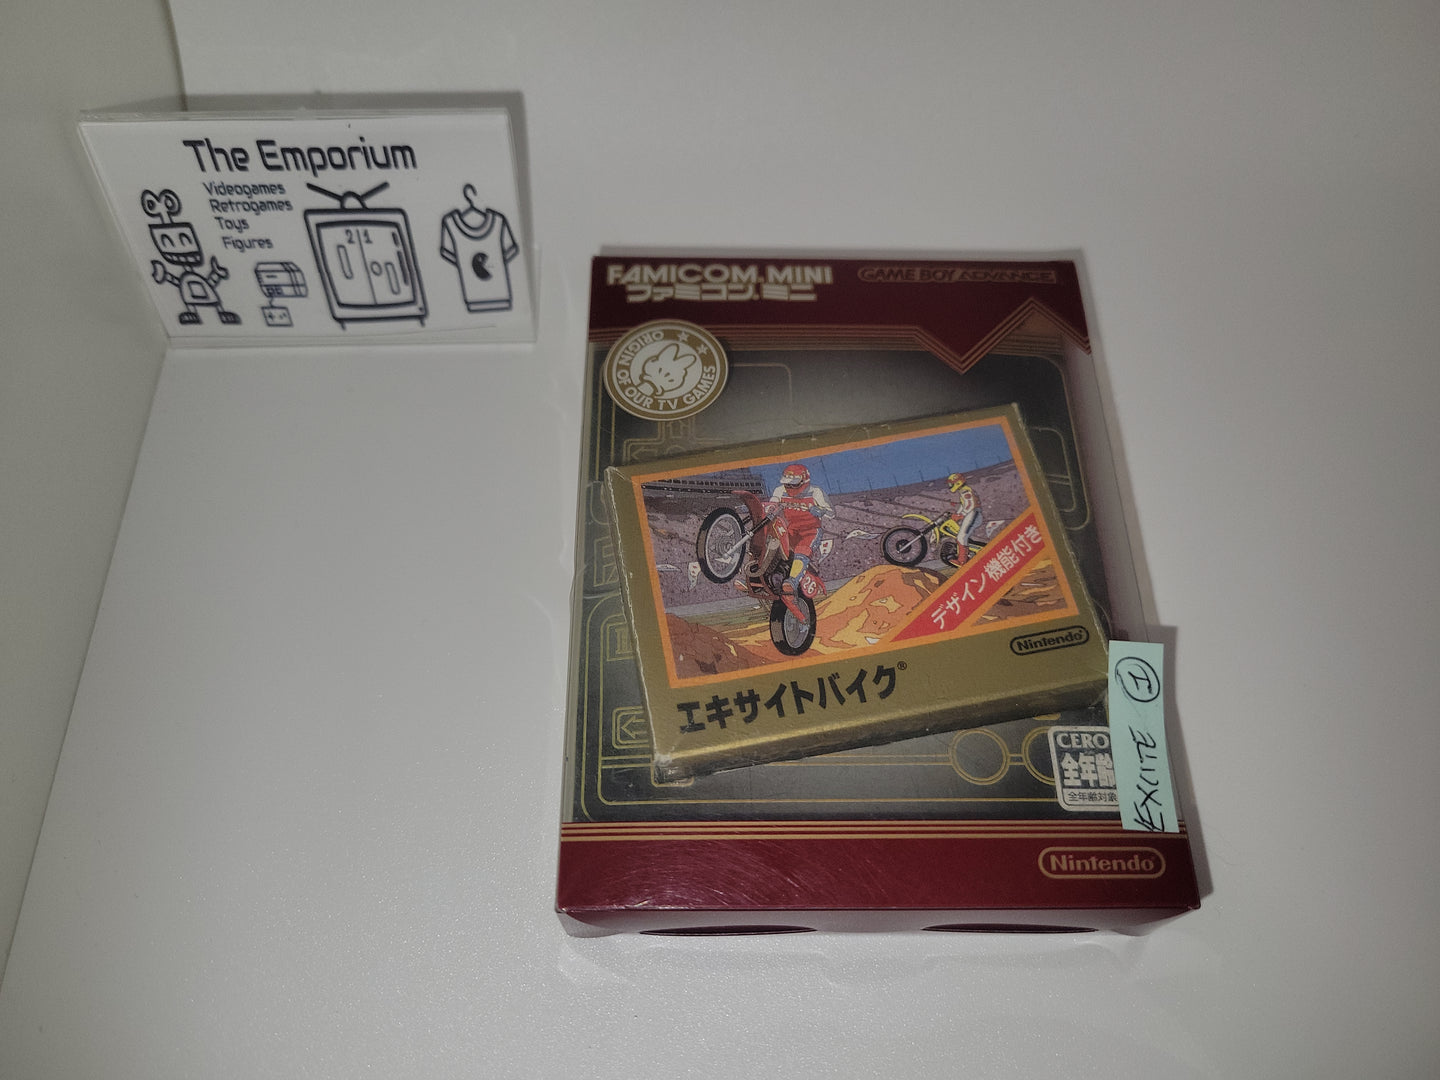 Famicom Mini Series Vol.04: Excite Bike - Nintendo GBA GameBoy Advance